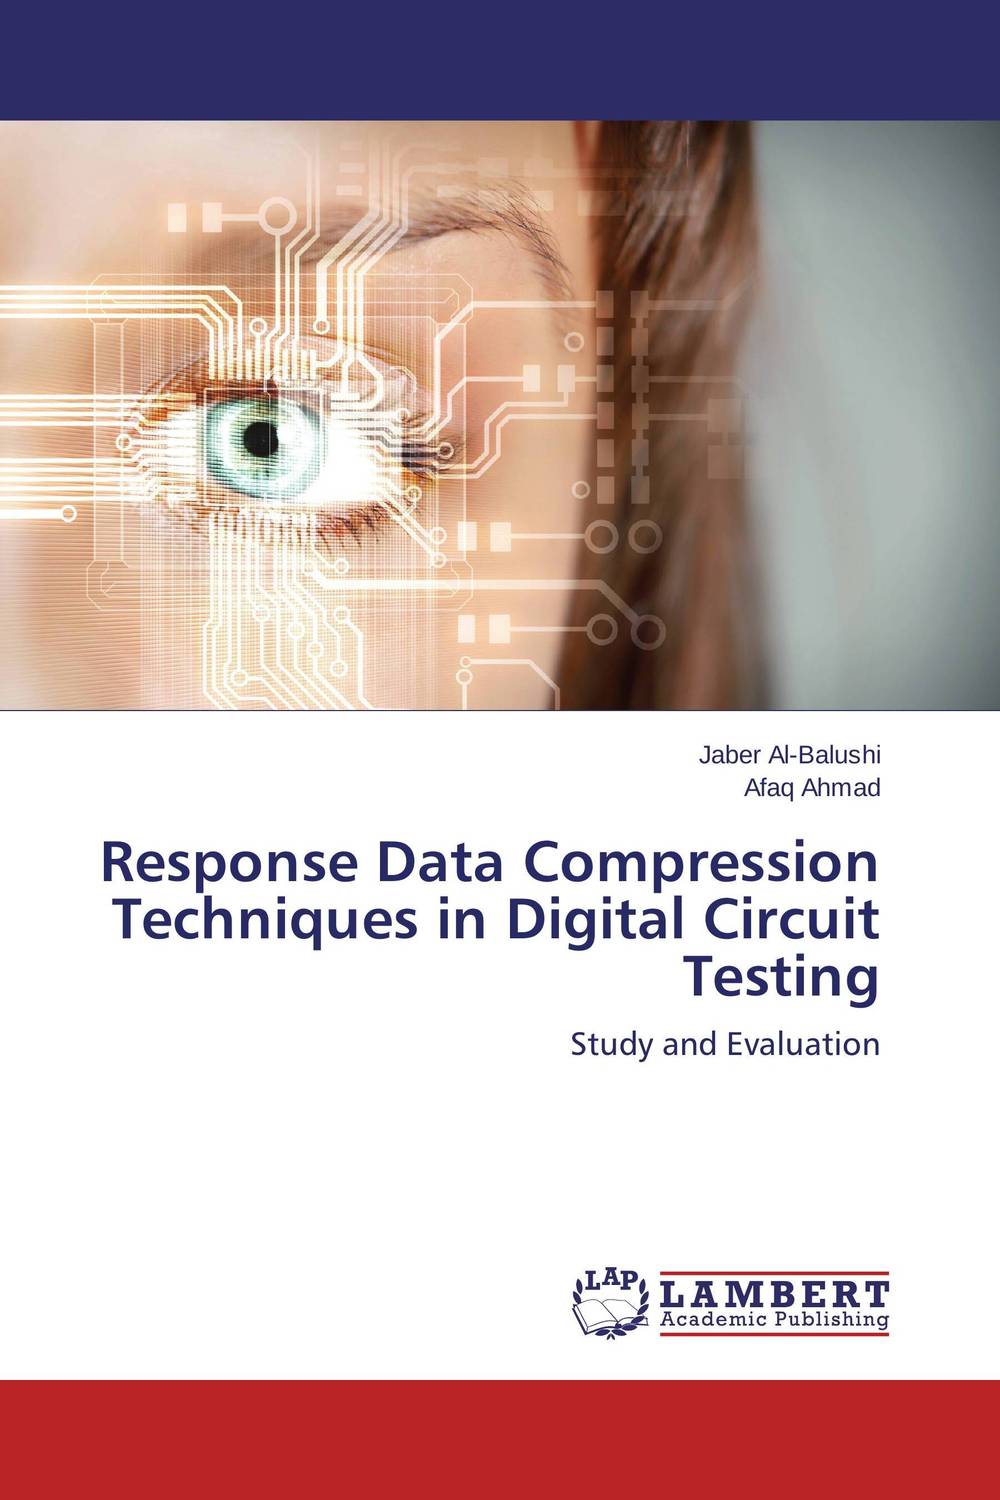 Response Data Compression Techniques in Digital Circuit Testing